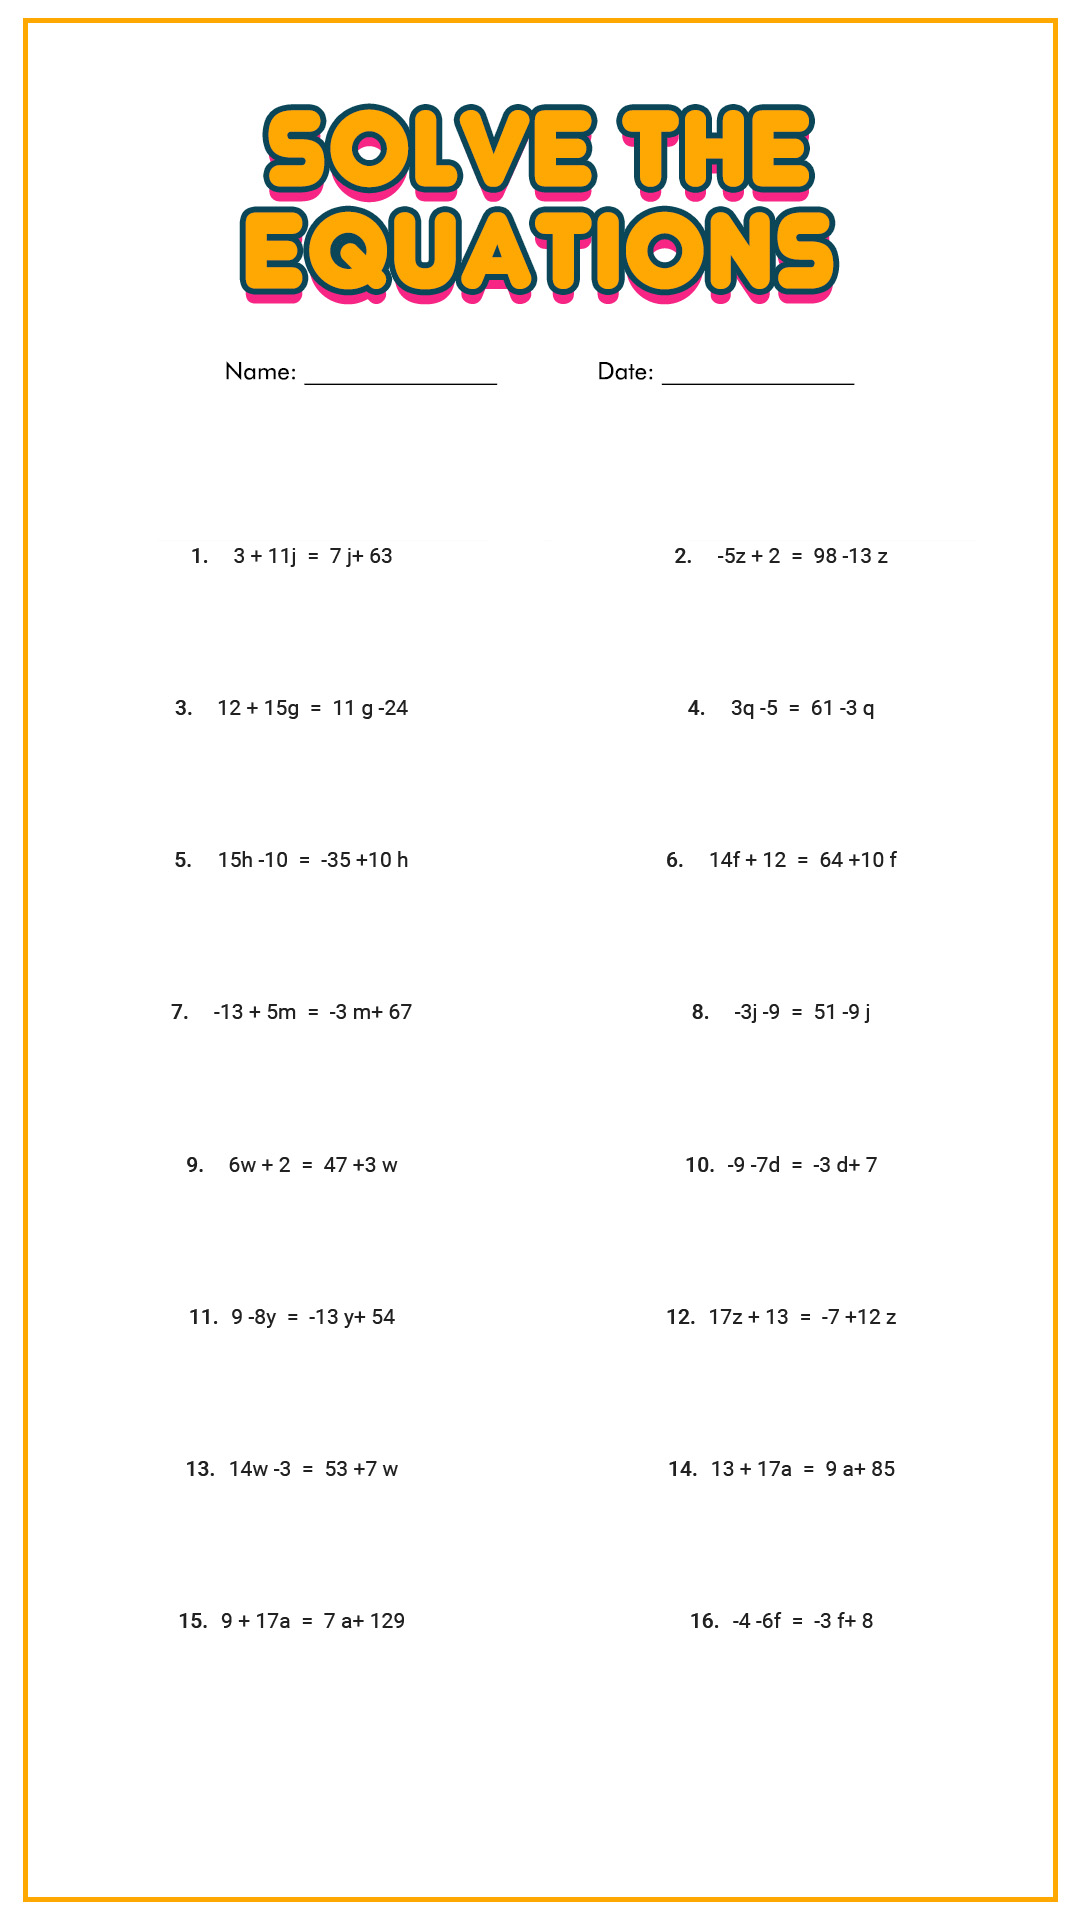 Solving Two-Step Equations Worksheet Image